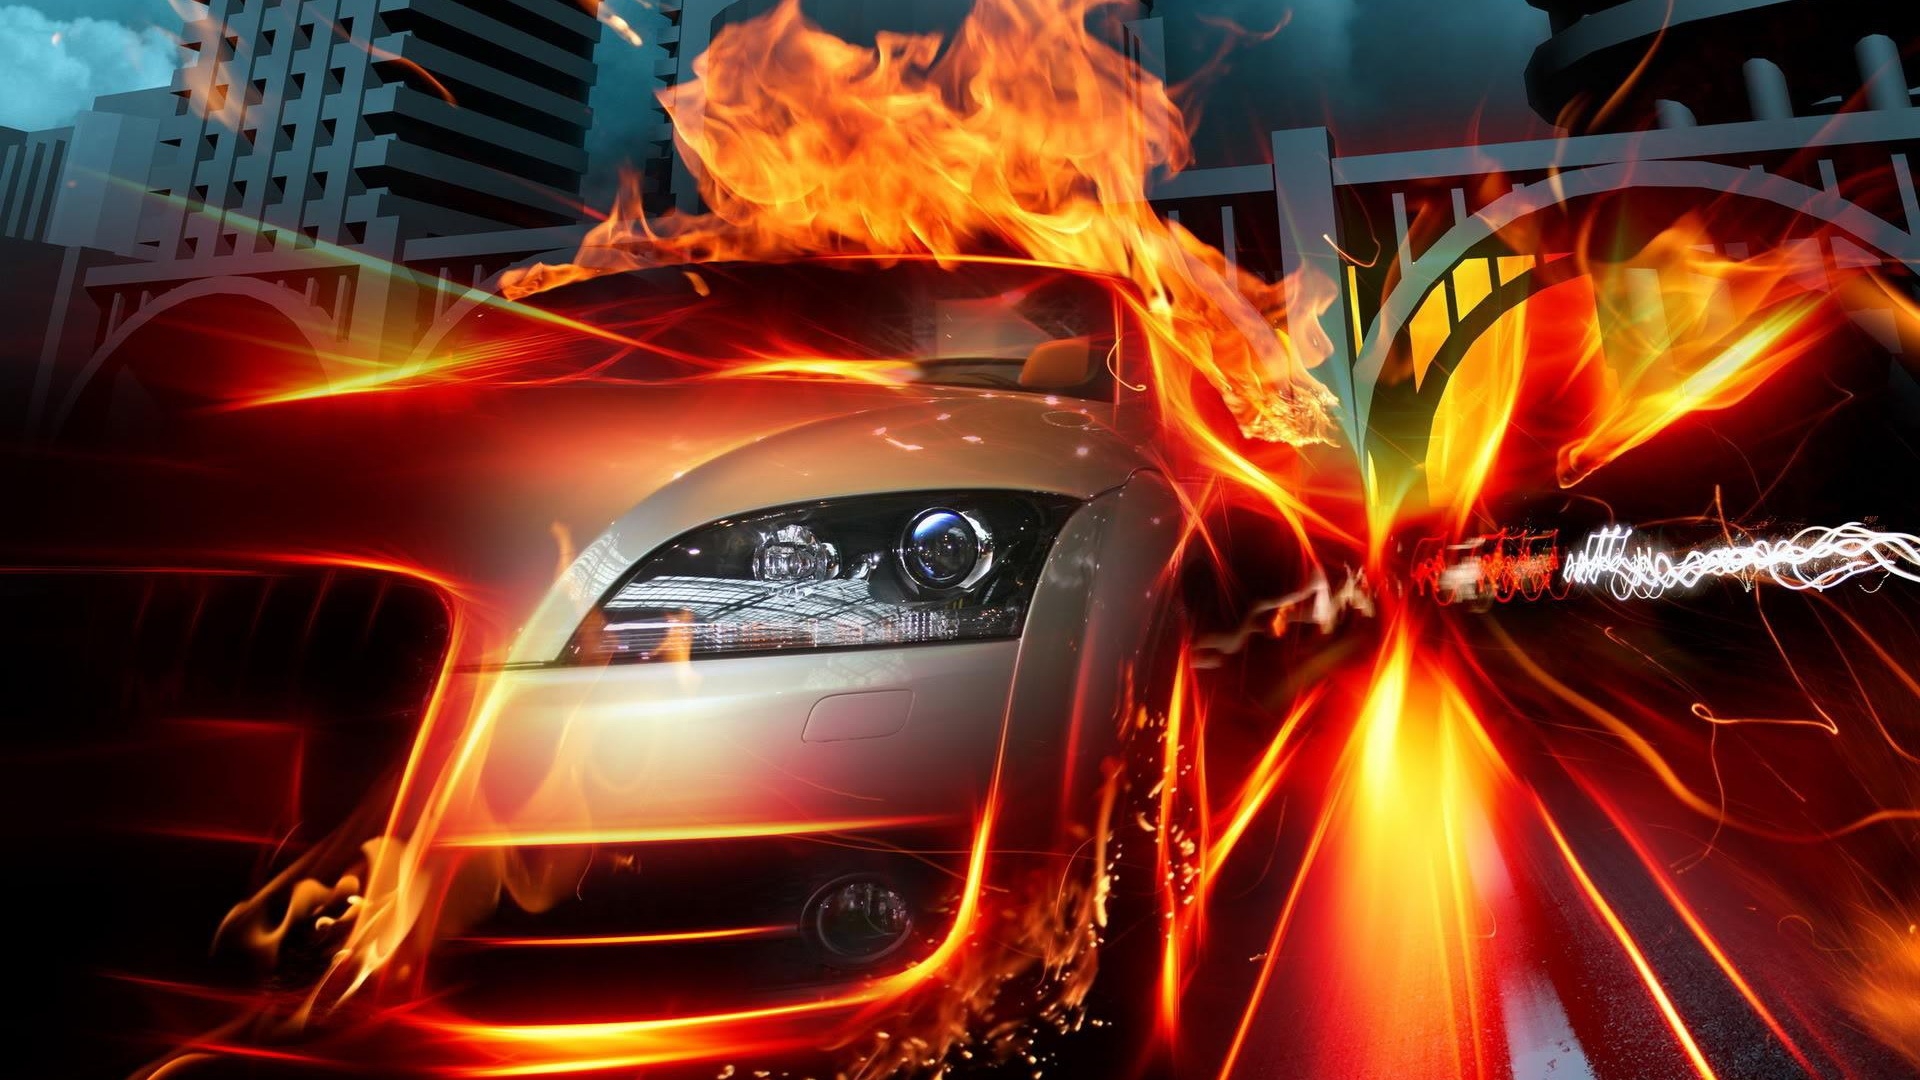 Download 21 fire-car-wallpaper Fire-Cars-Wallpaper-Phone-The-Galleries-Of-Hd-Wallpaper-.jpg